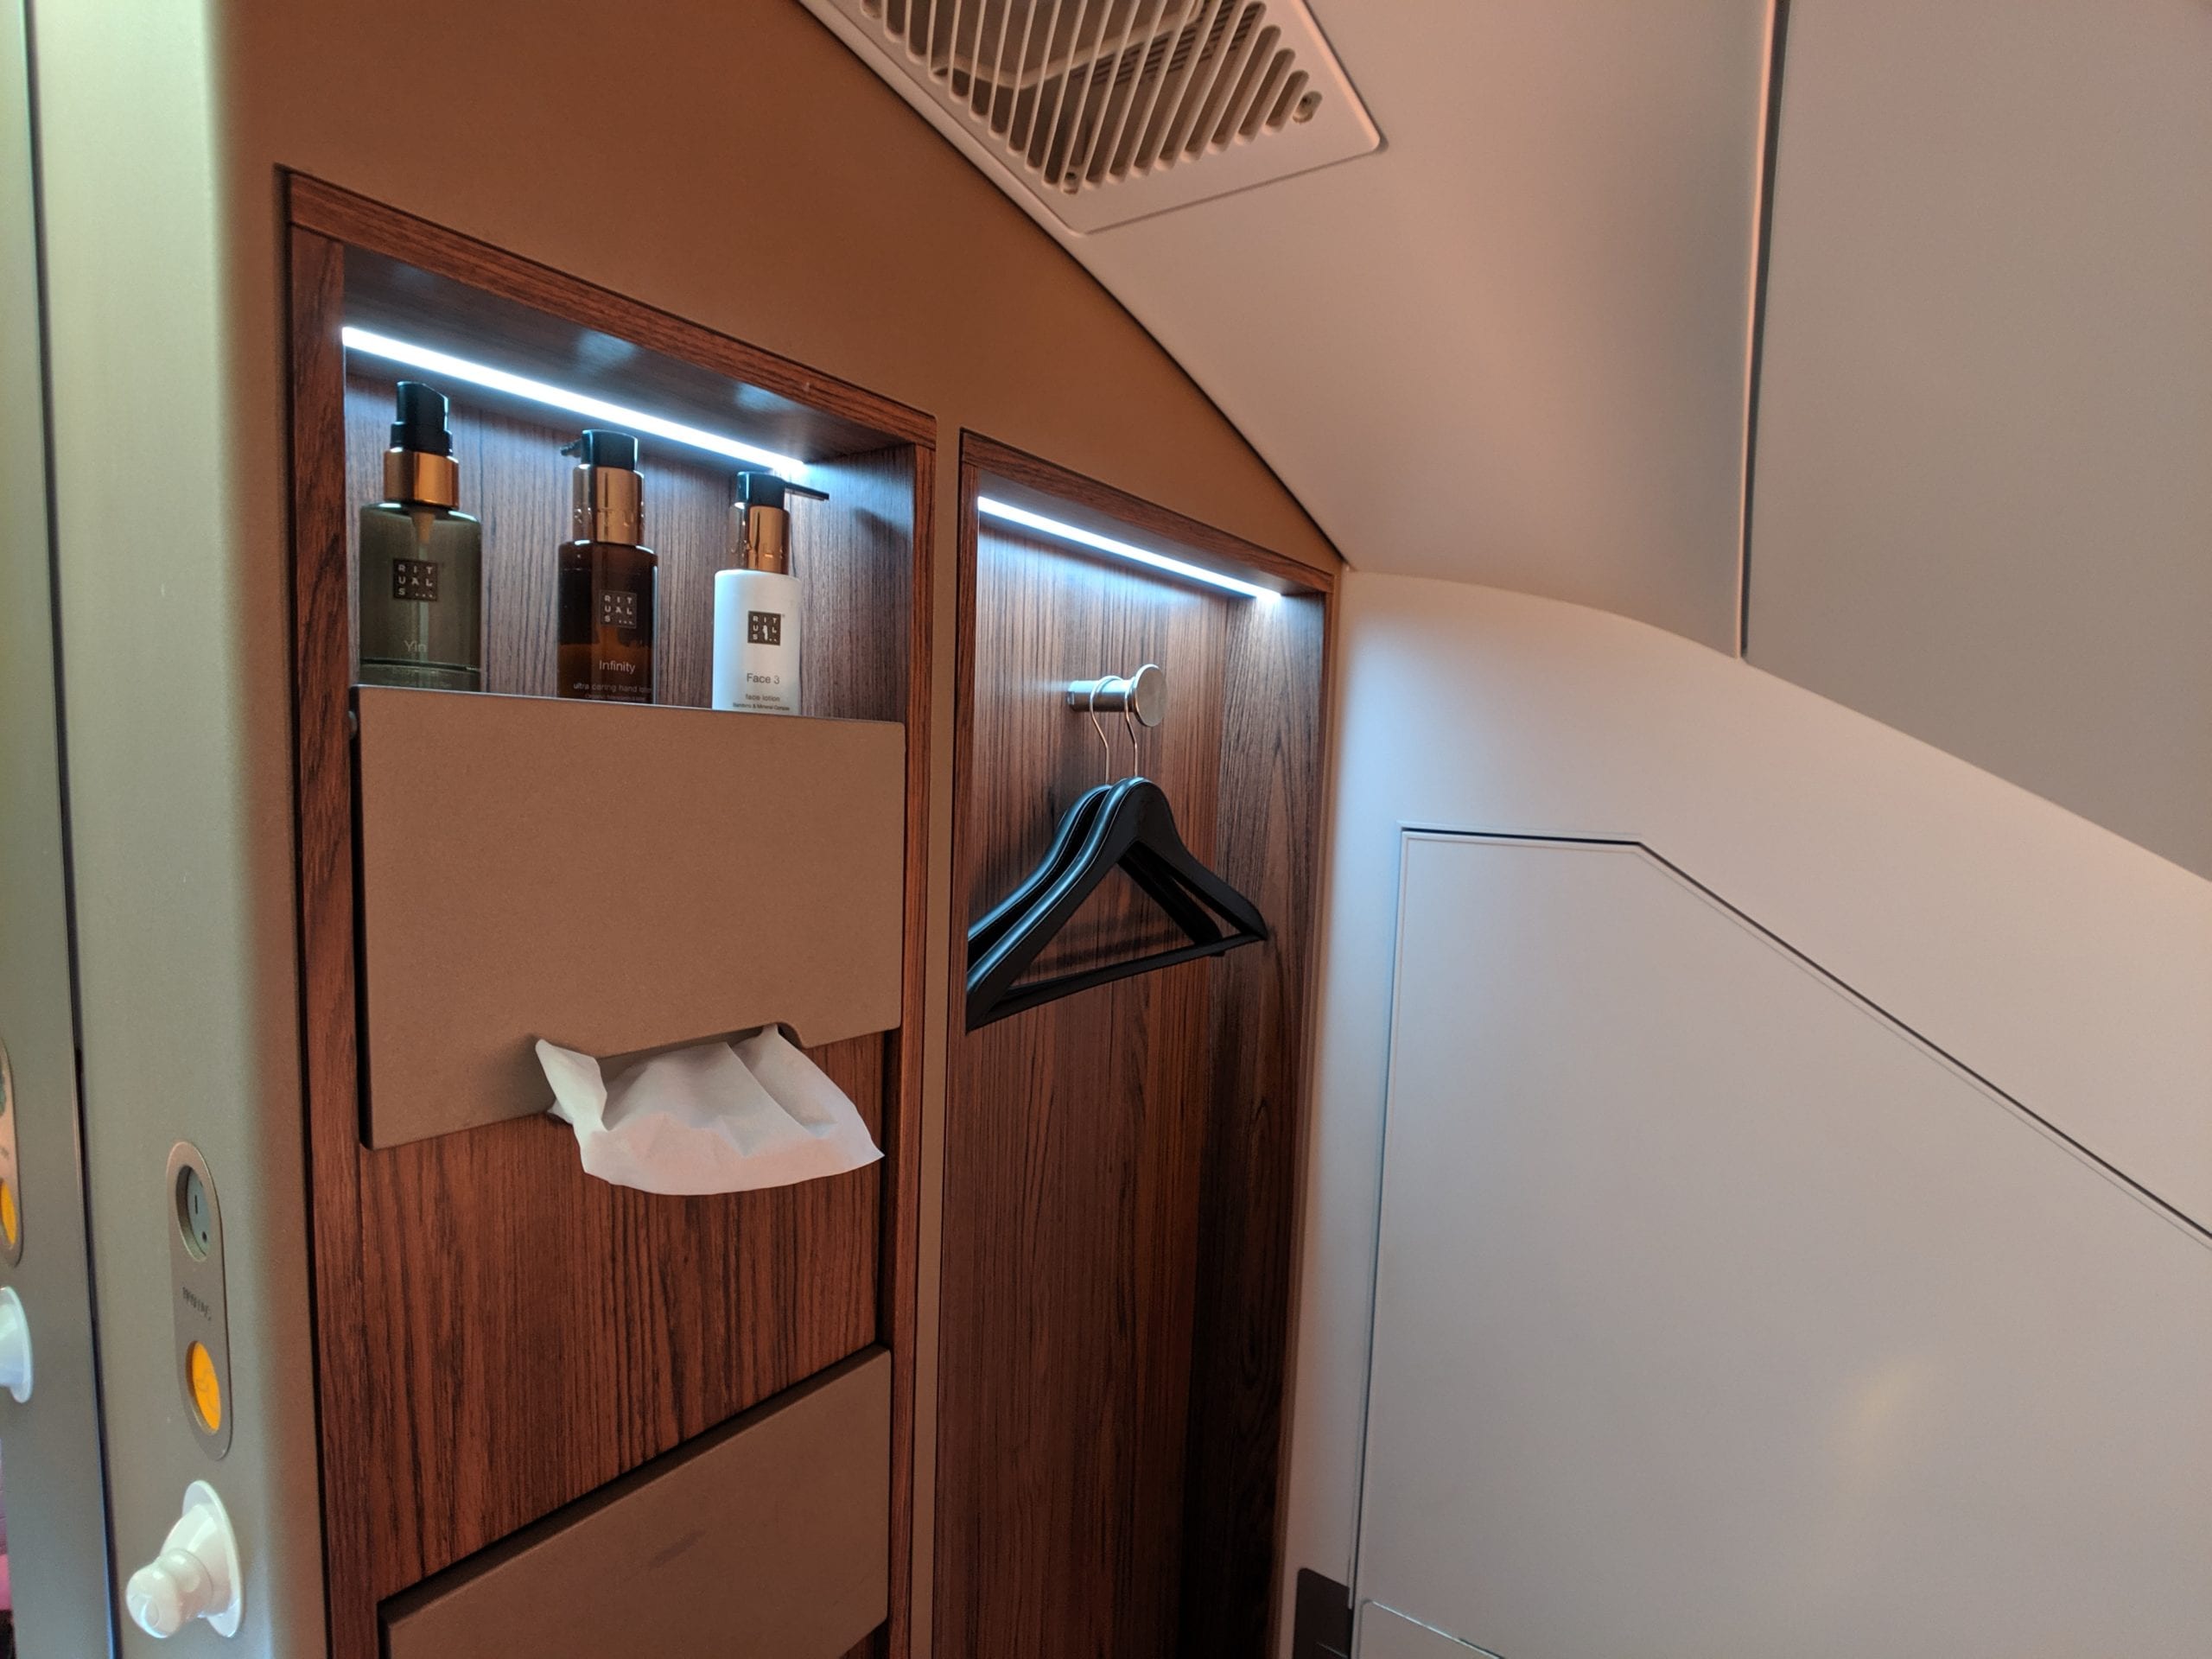 qatar airways first class lavatory